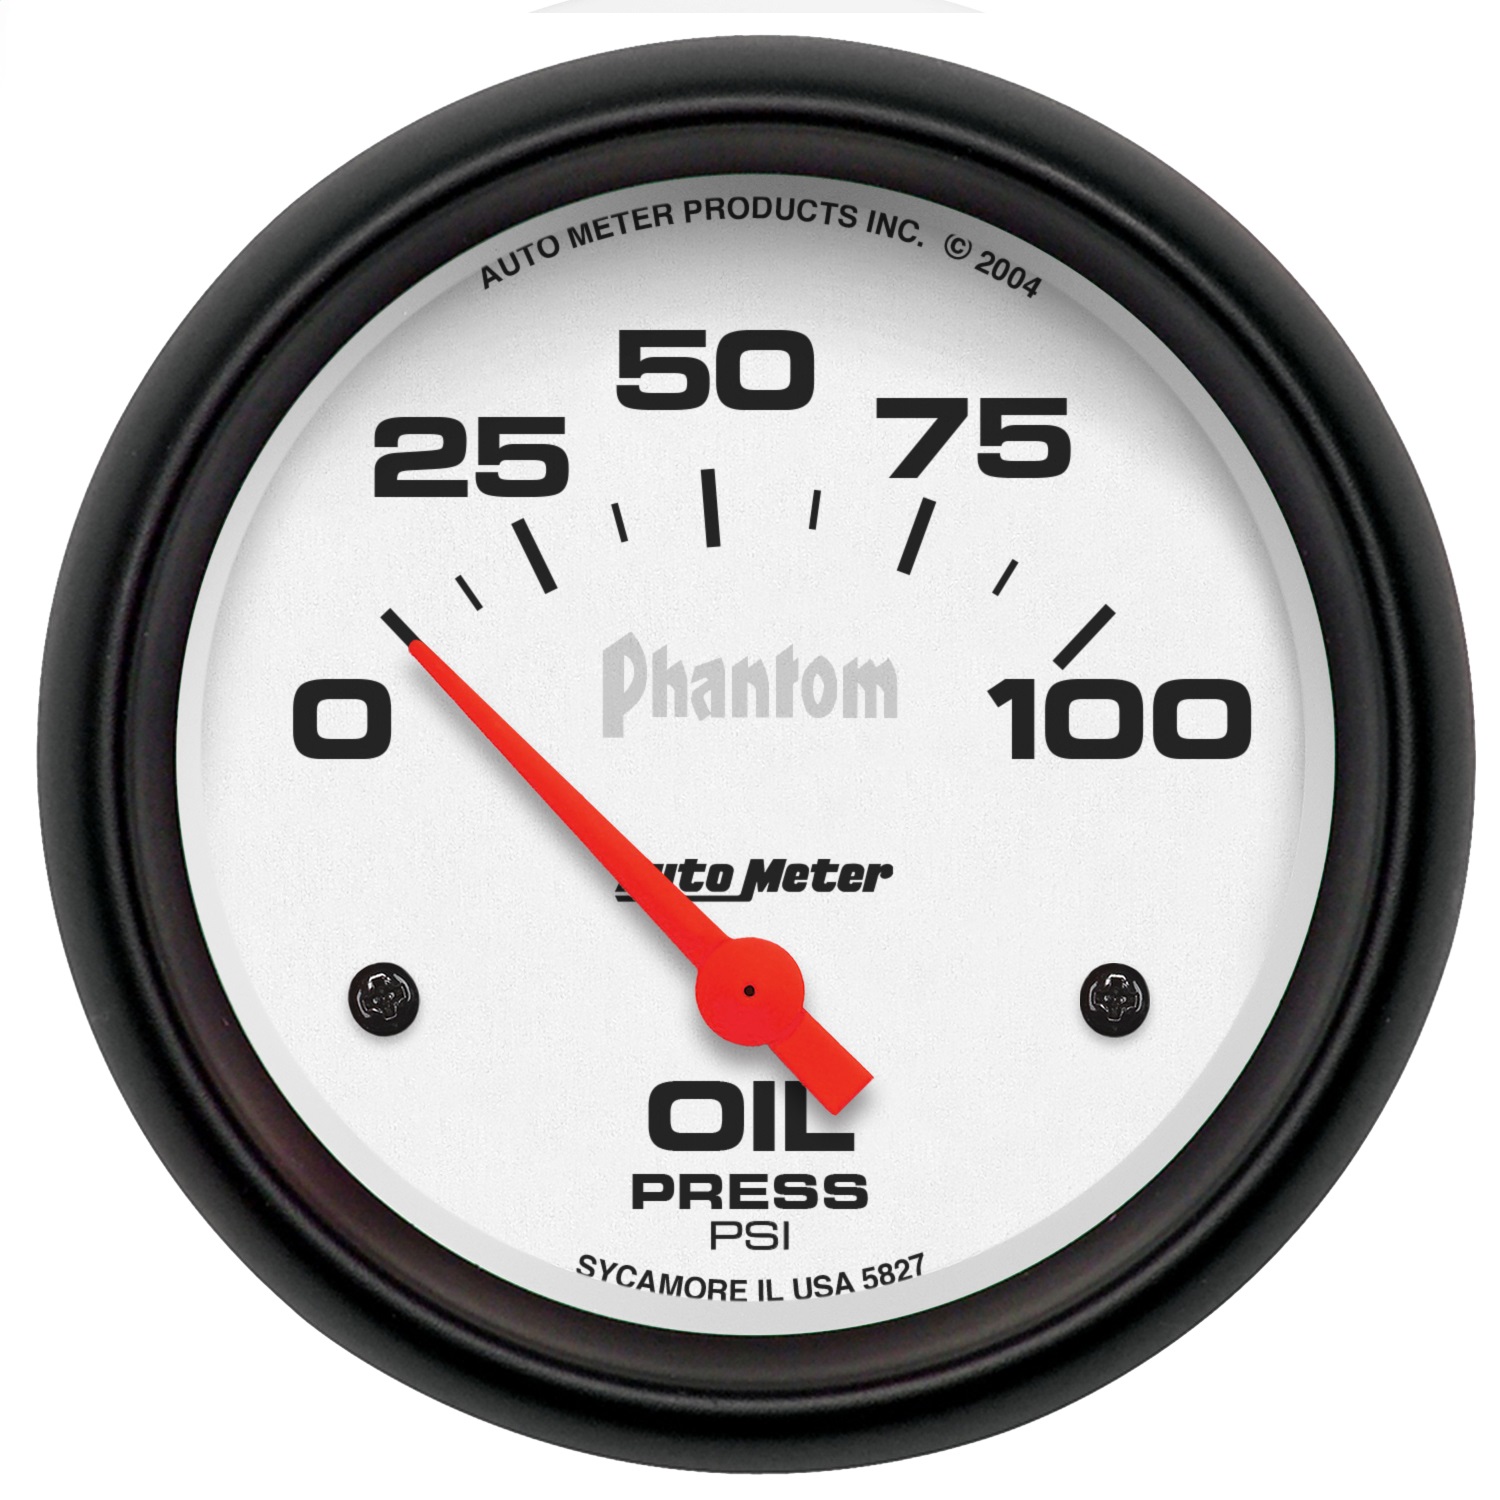 Auto Meter Auto Meter 5827 Phantom; Electric Oil Pressure Gauge